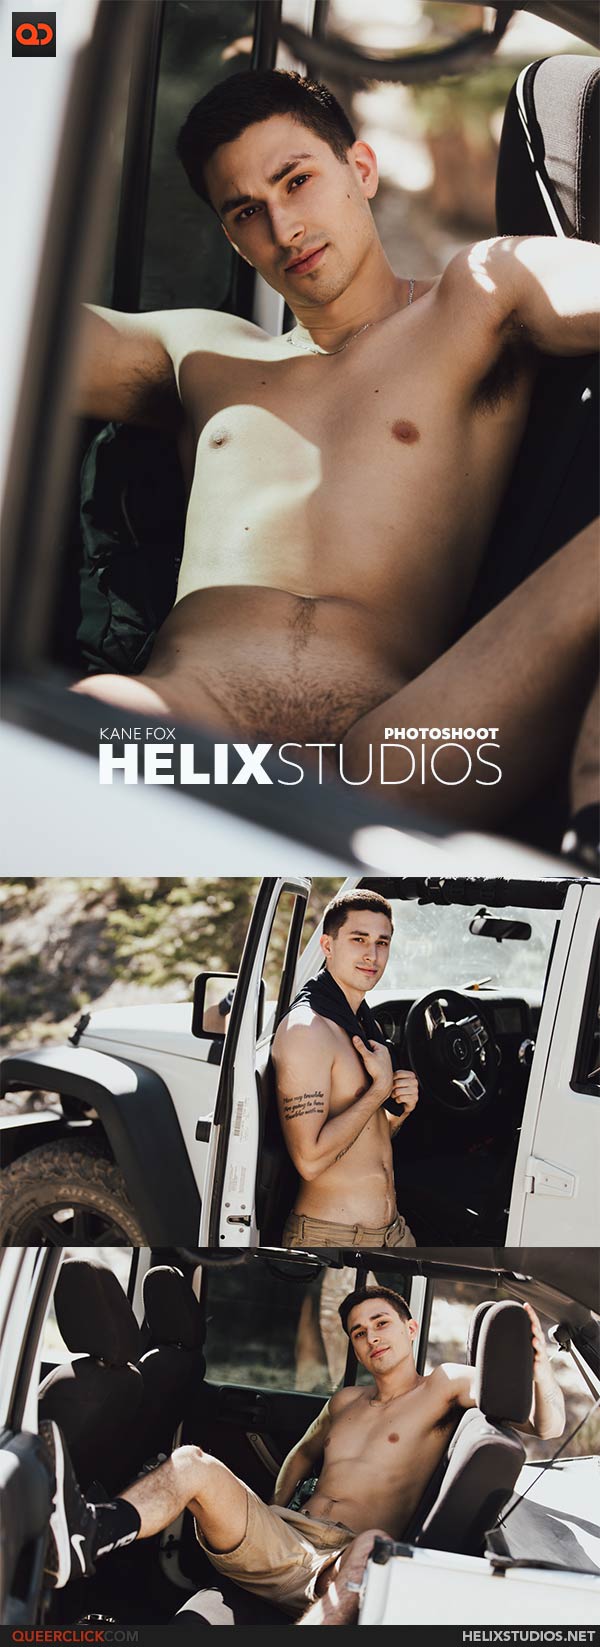 Helix Studios: Kane Fox - Photoshoot